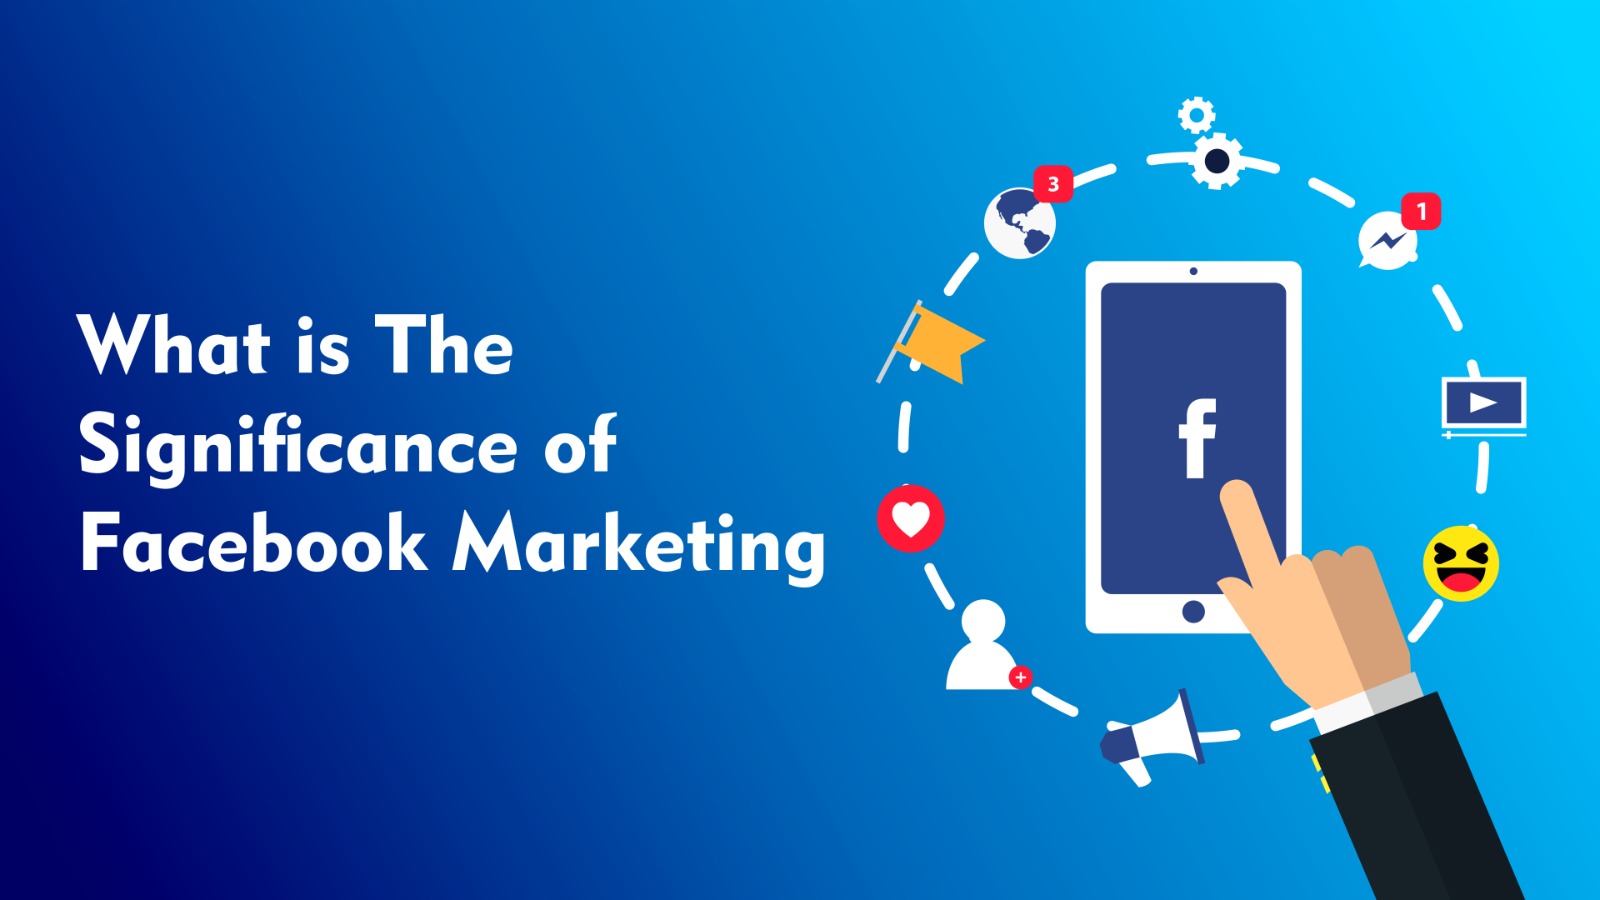 Facebook marketing services, Facebook Advertising services, Facebook marketing, Facebook services, marketing services, Facebook, marketing, services, Facebook marketing services